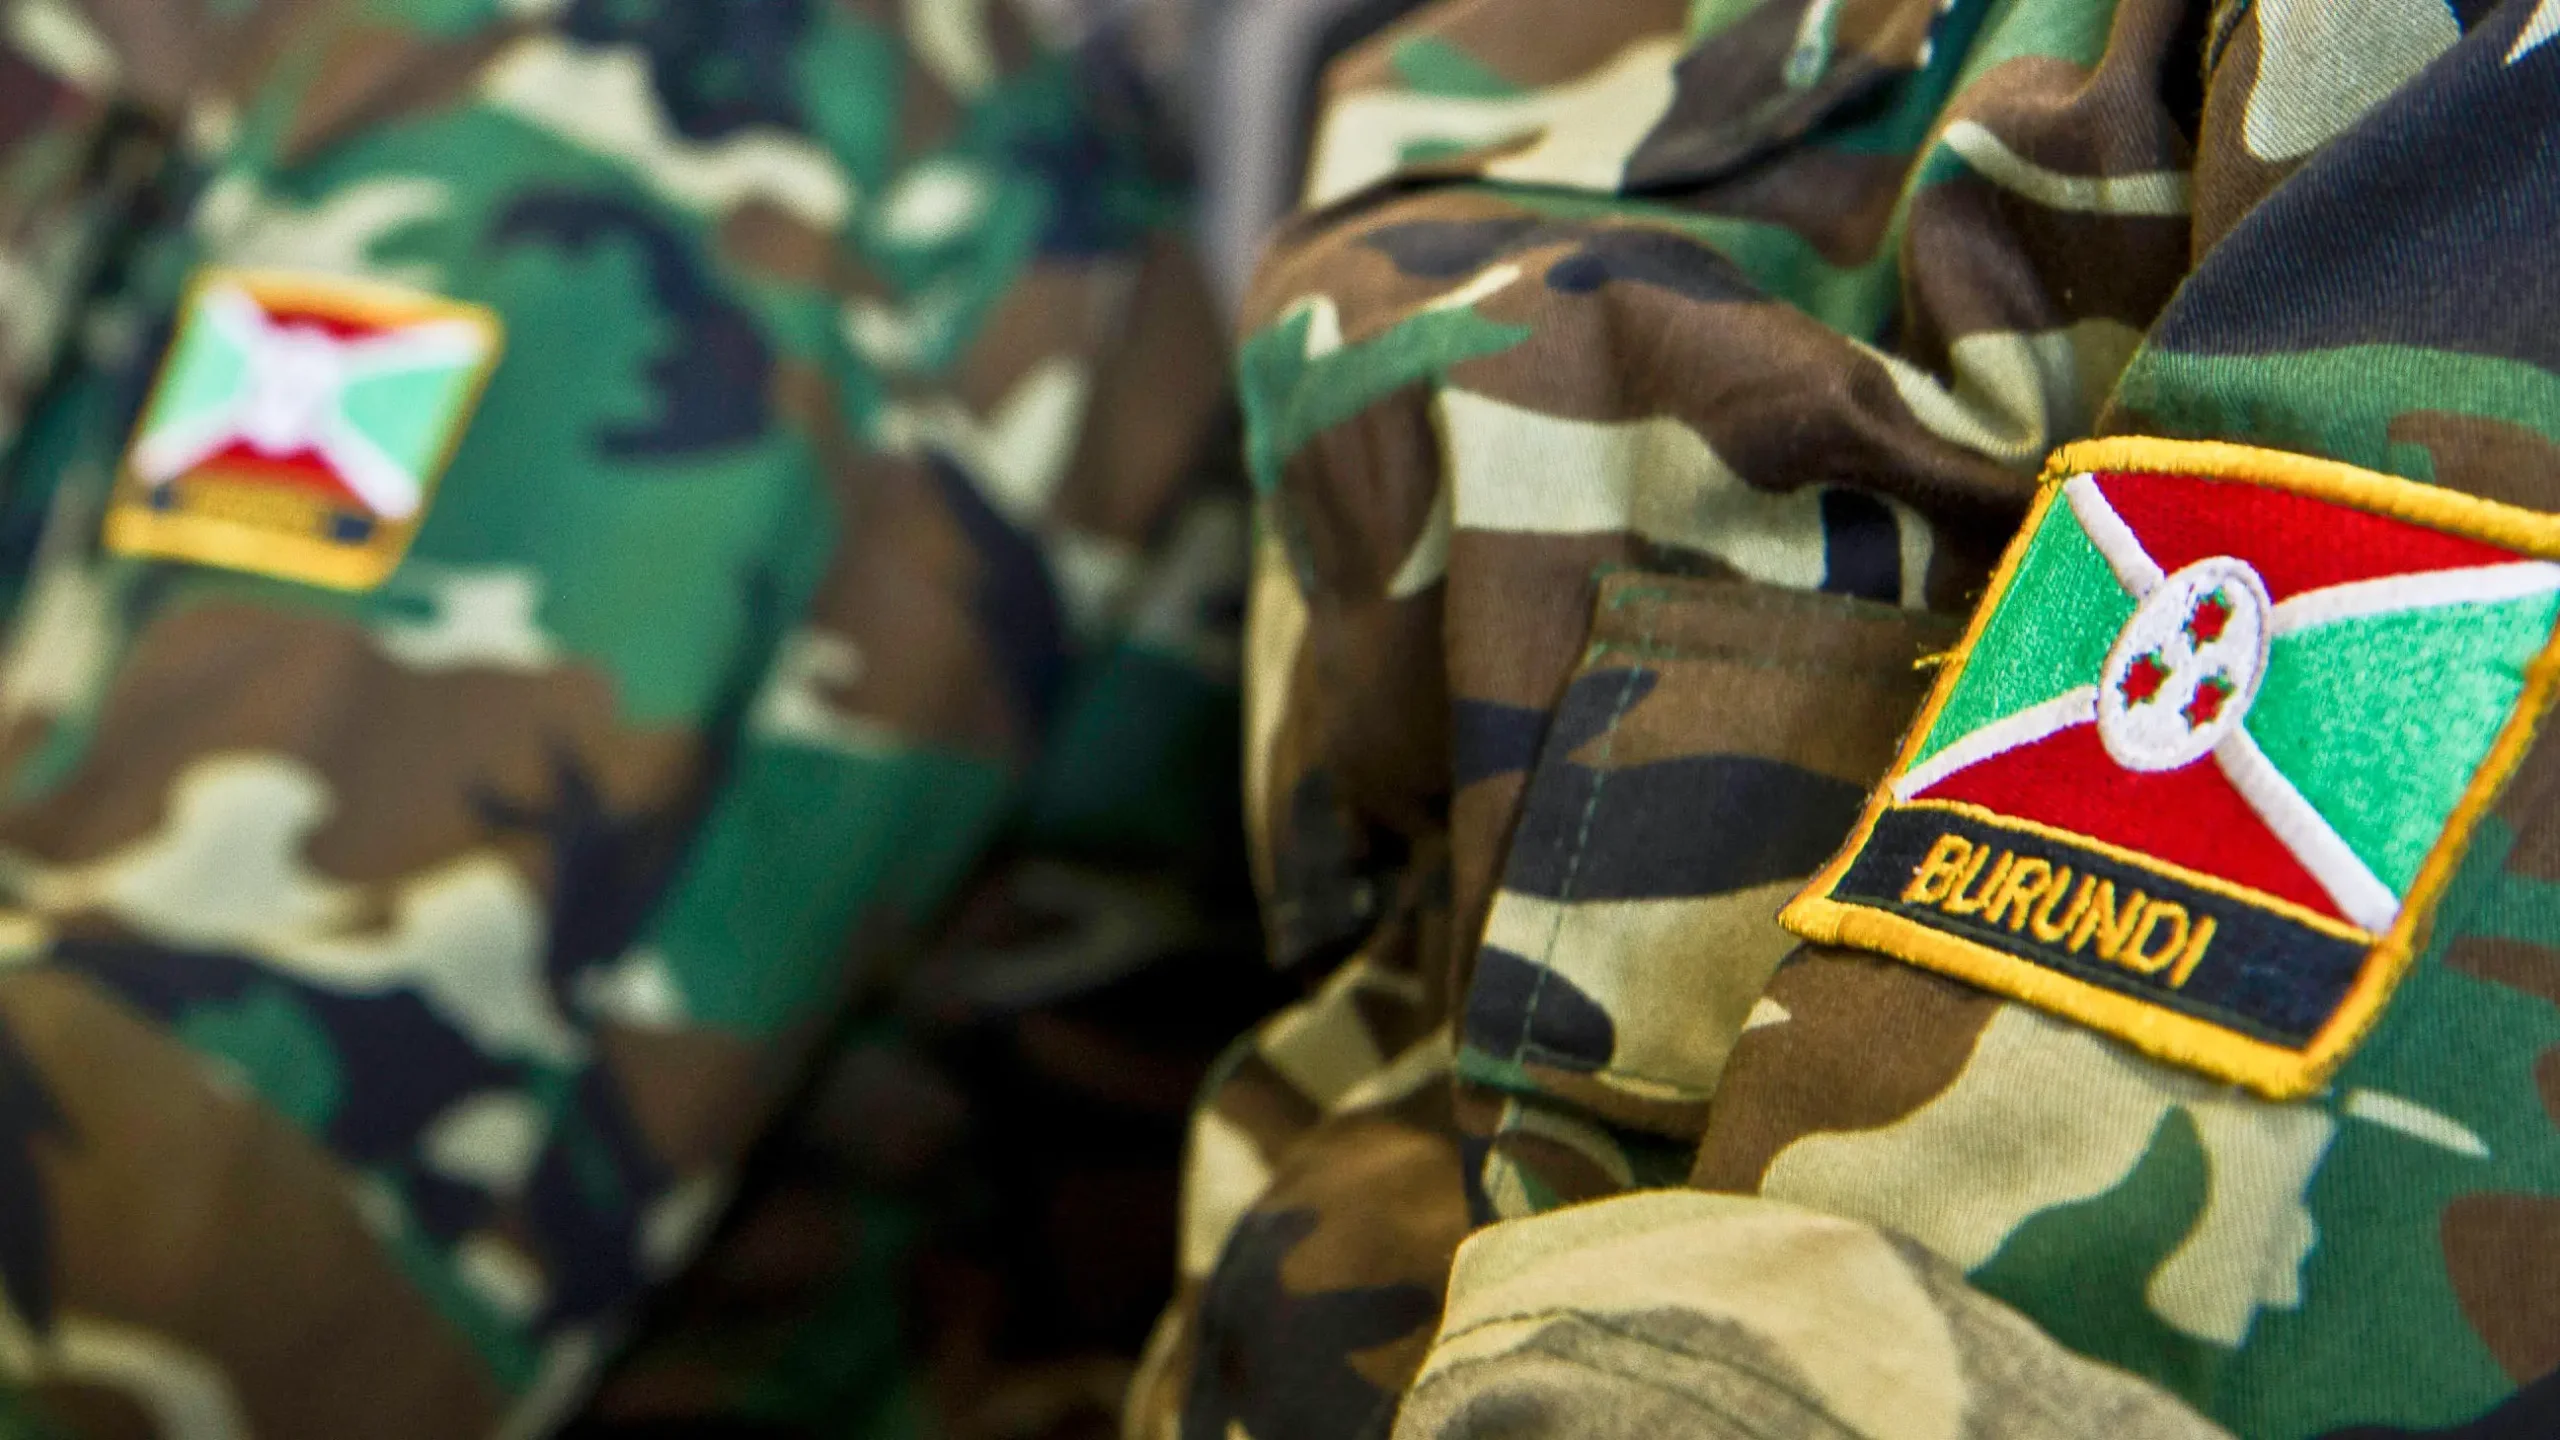 M23 rebels captures several Burundian soldiers